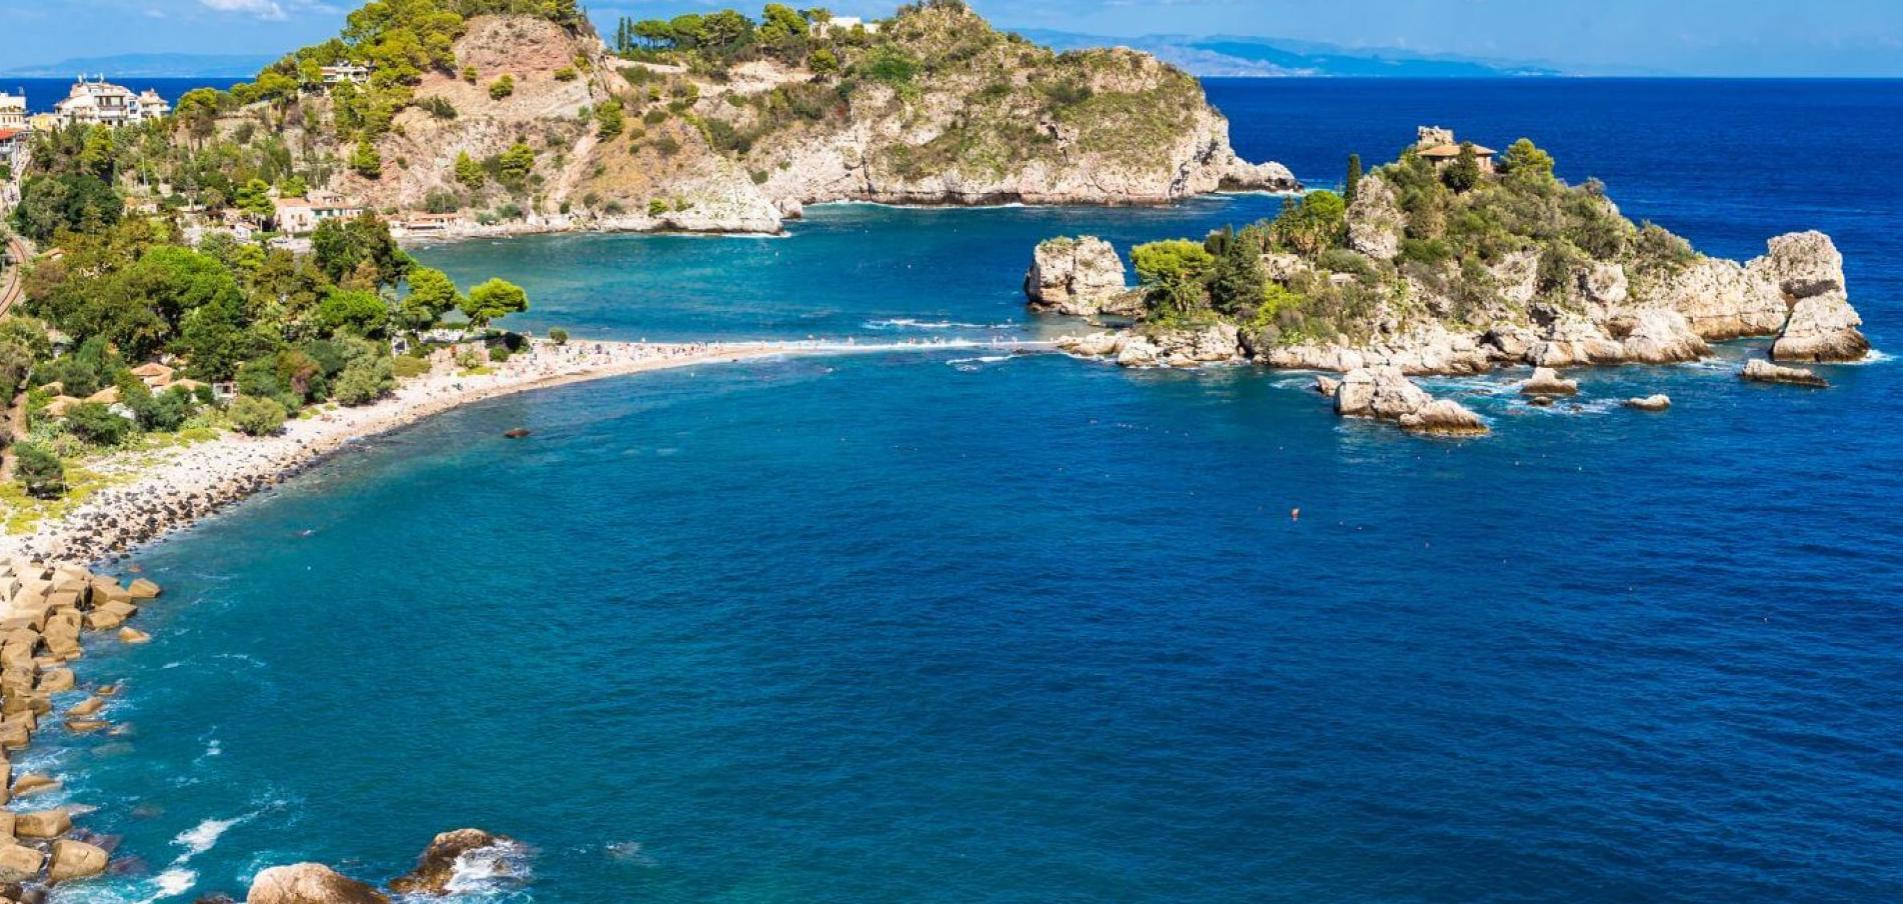 Location de yacht de luxe Sicile